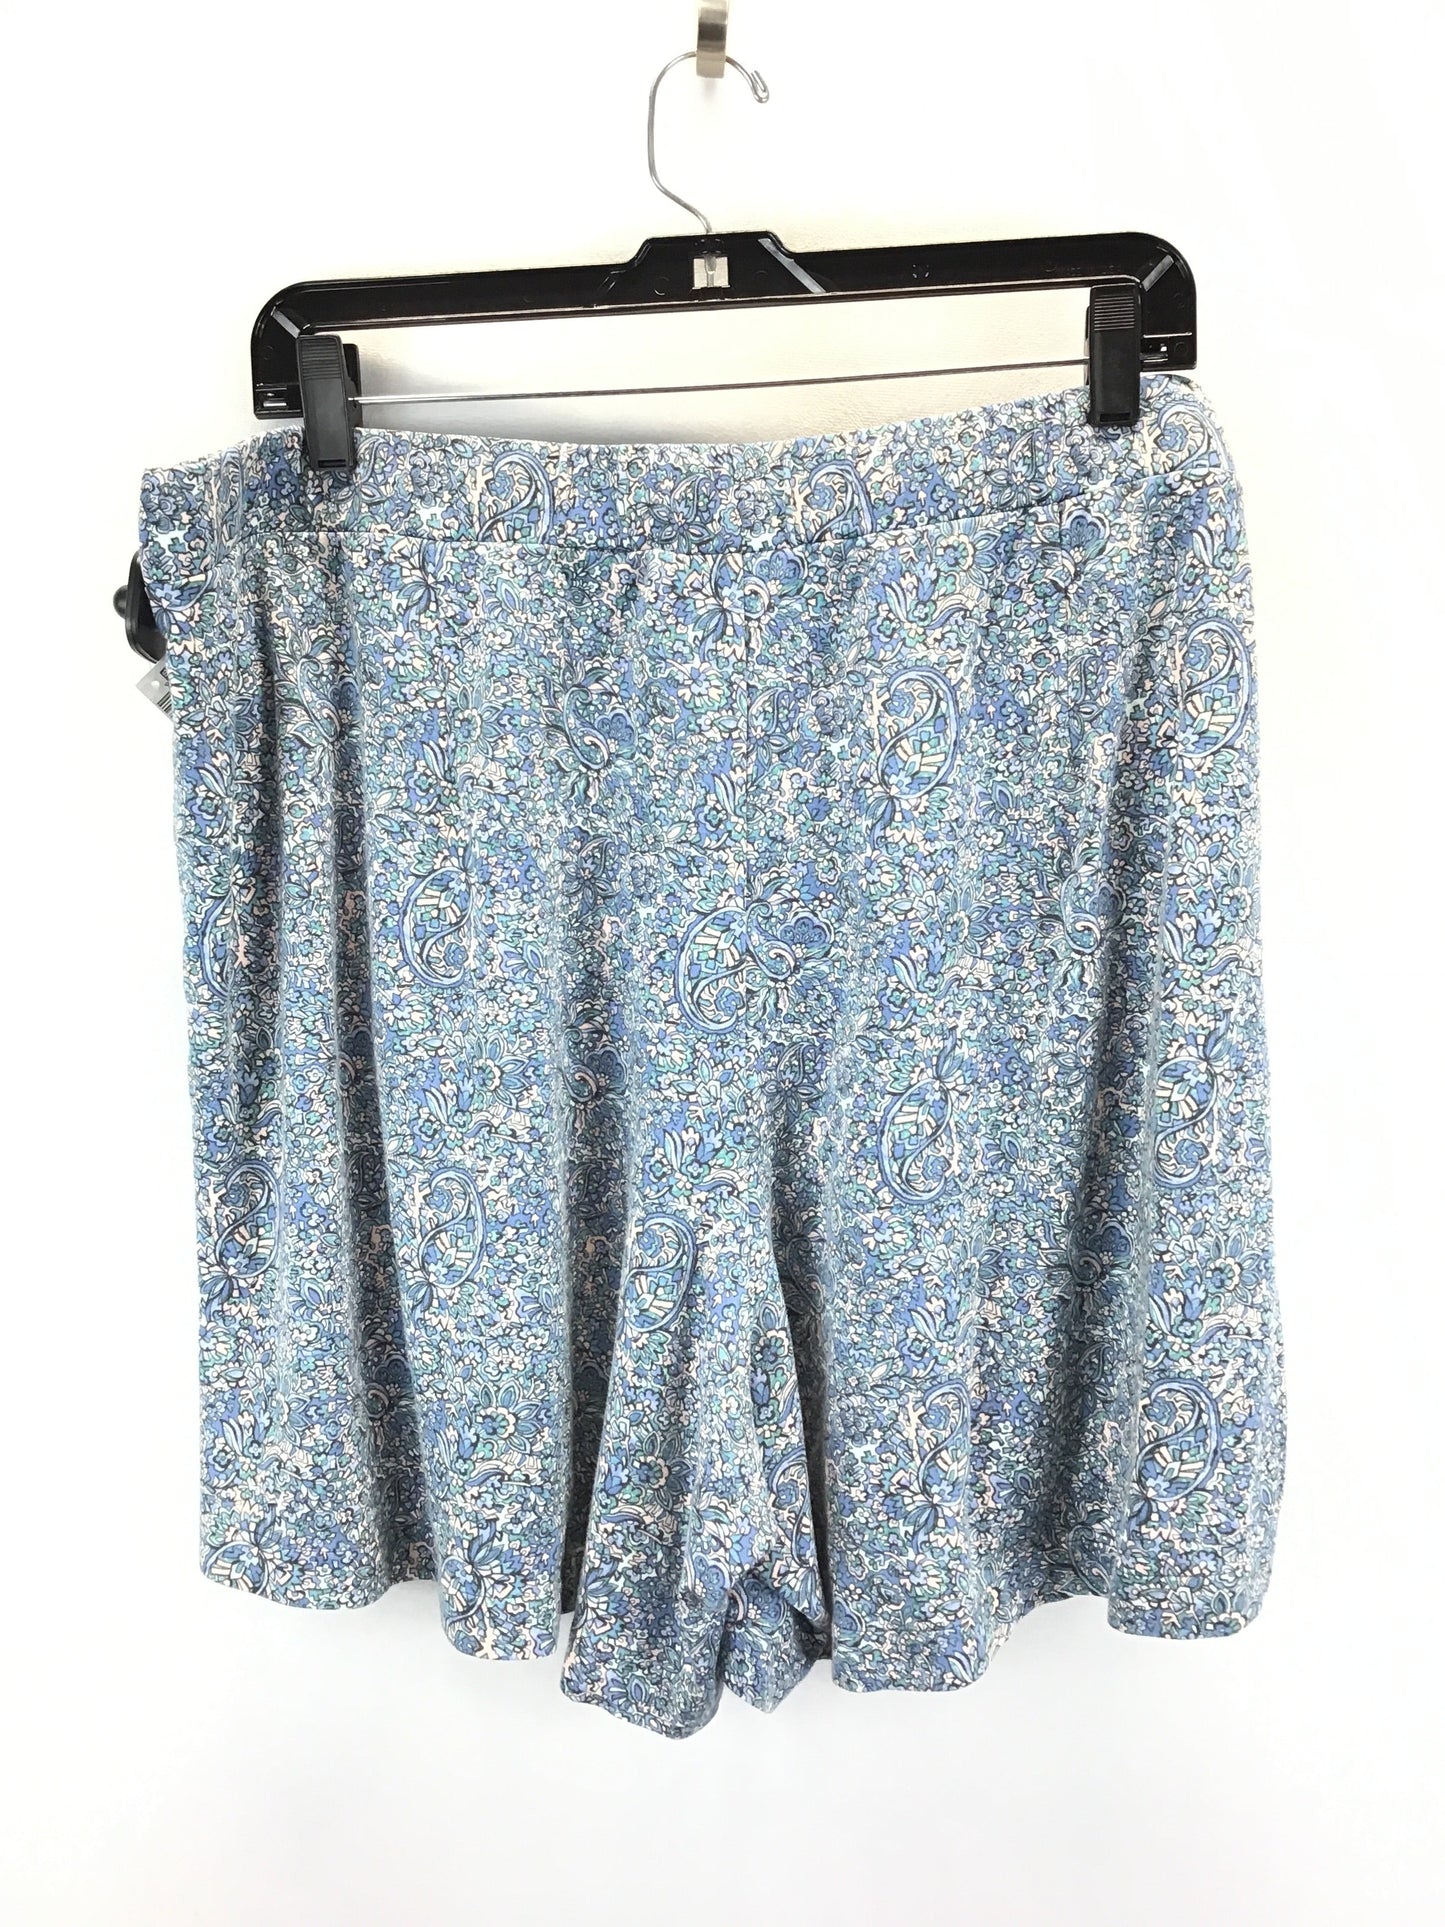 Shorts By J. Jill  Size: 2x